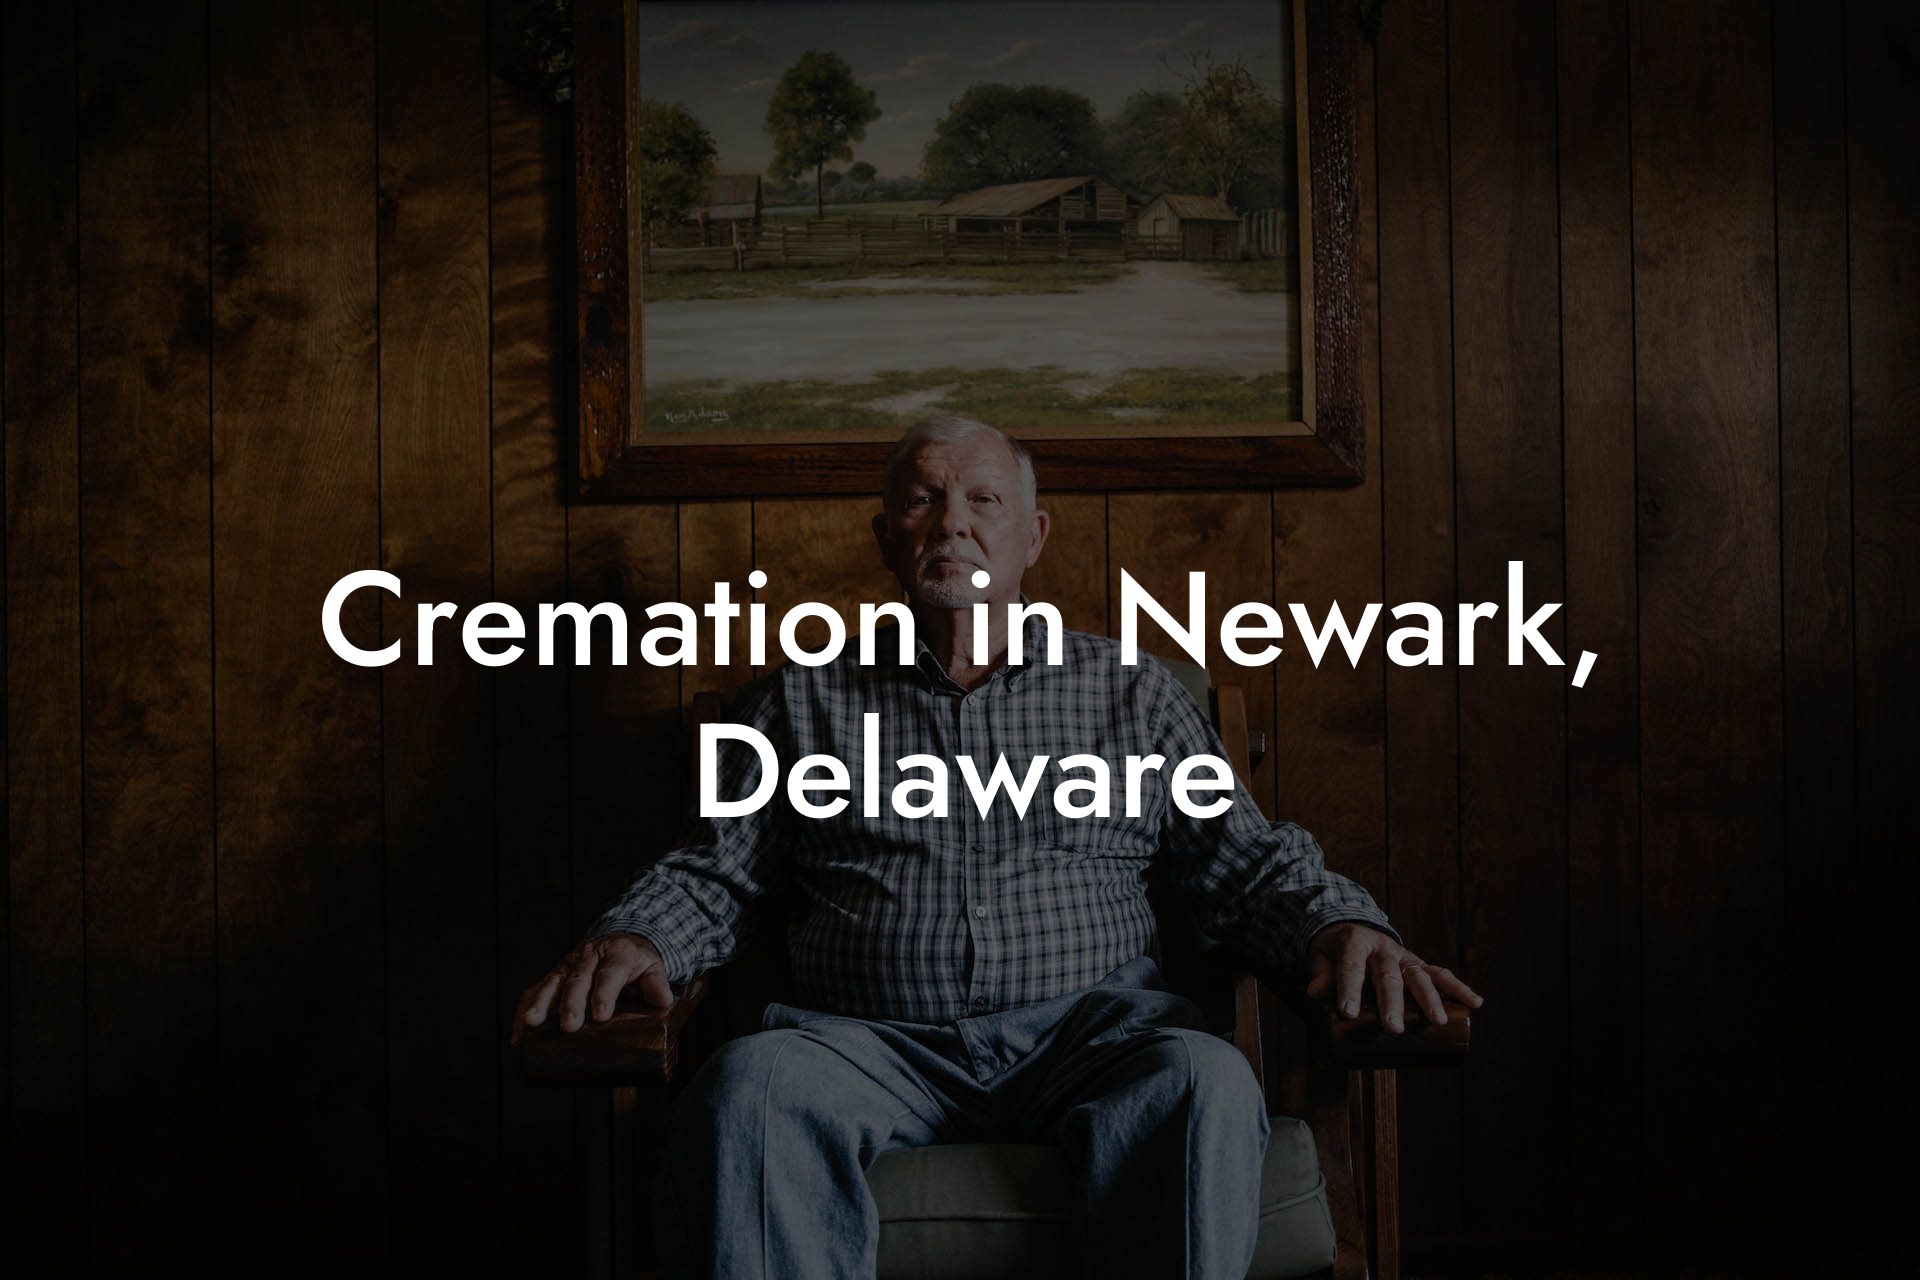 Cremation in Newark, Delaware